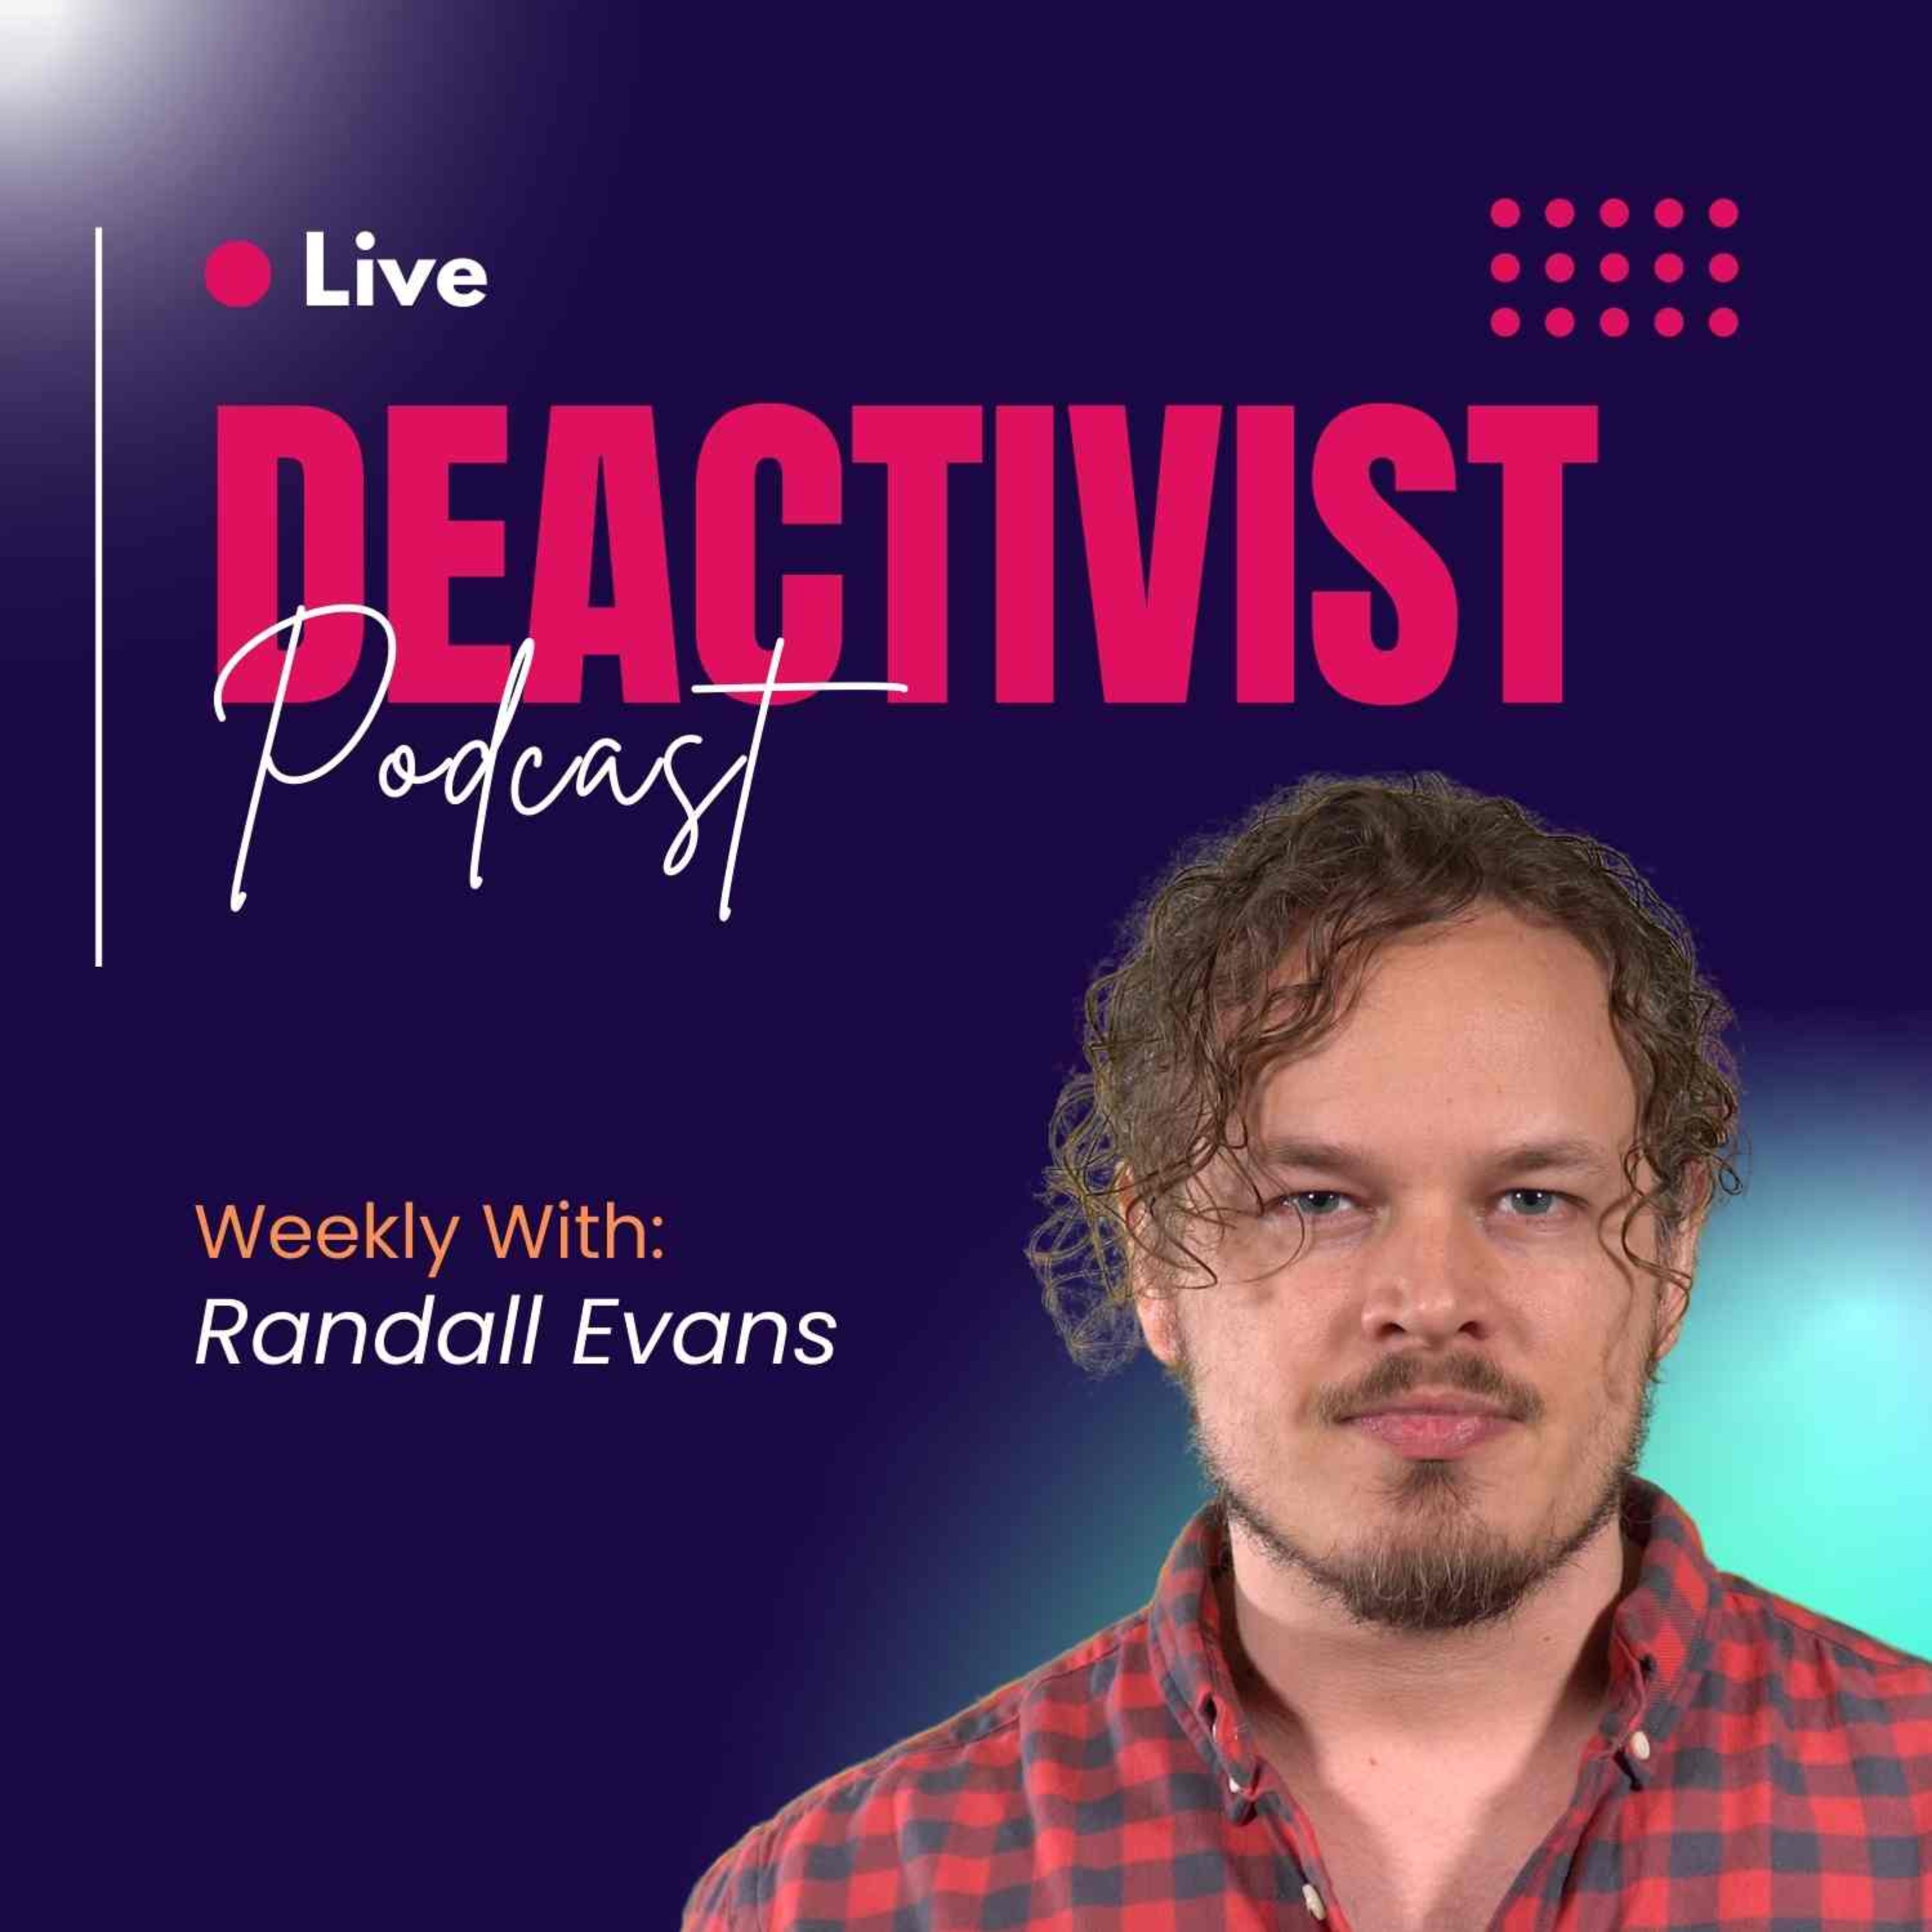 The Deactivist Podcast